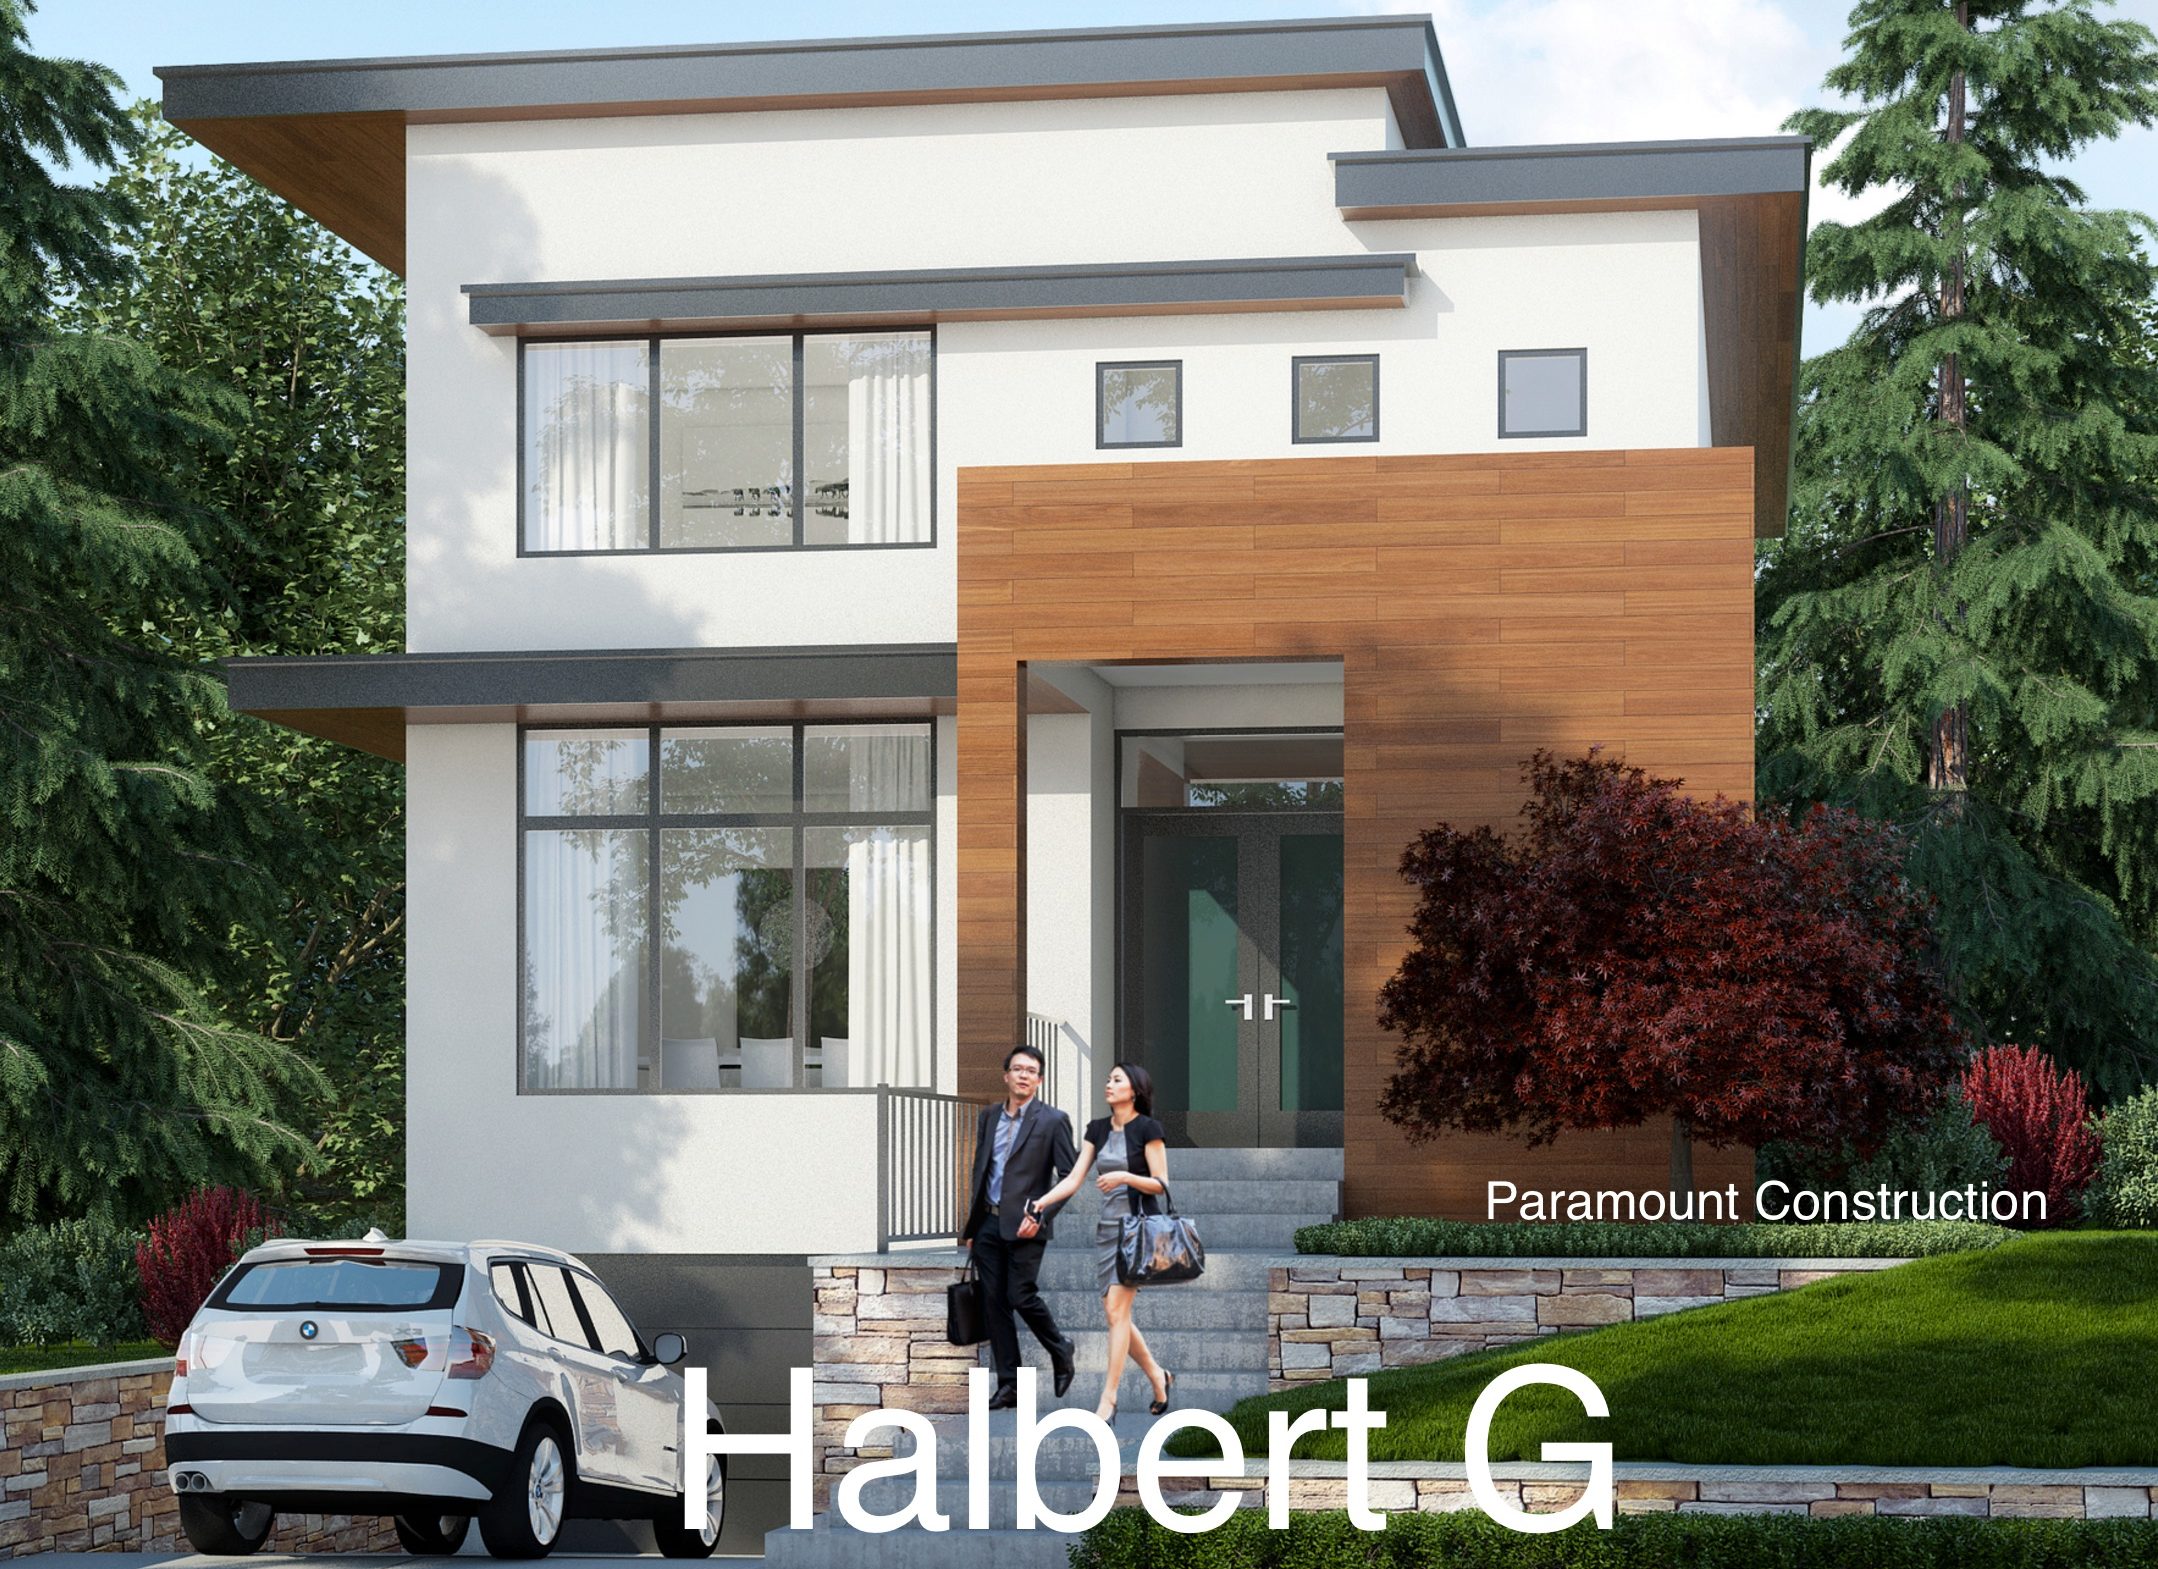 w. halbert bethesda home for sale